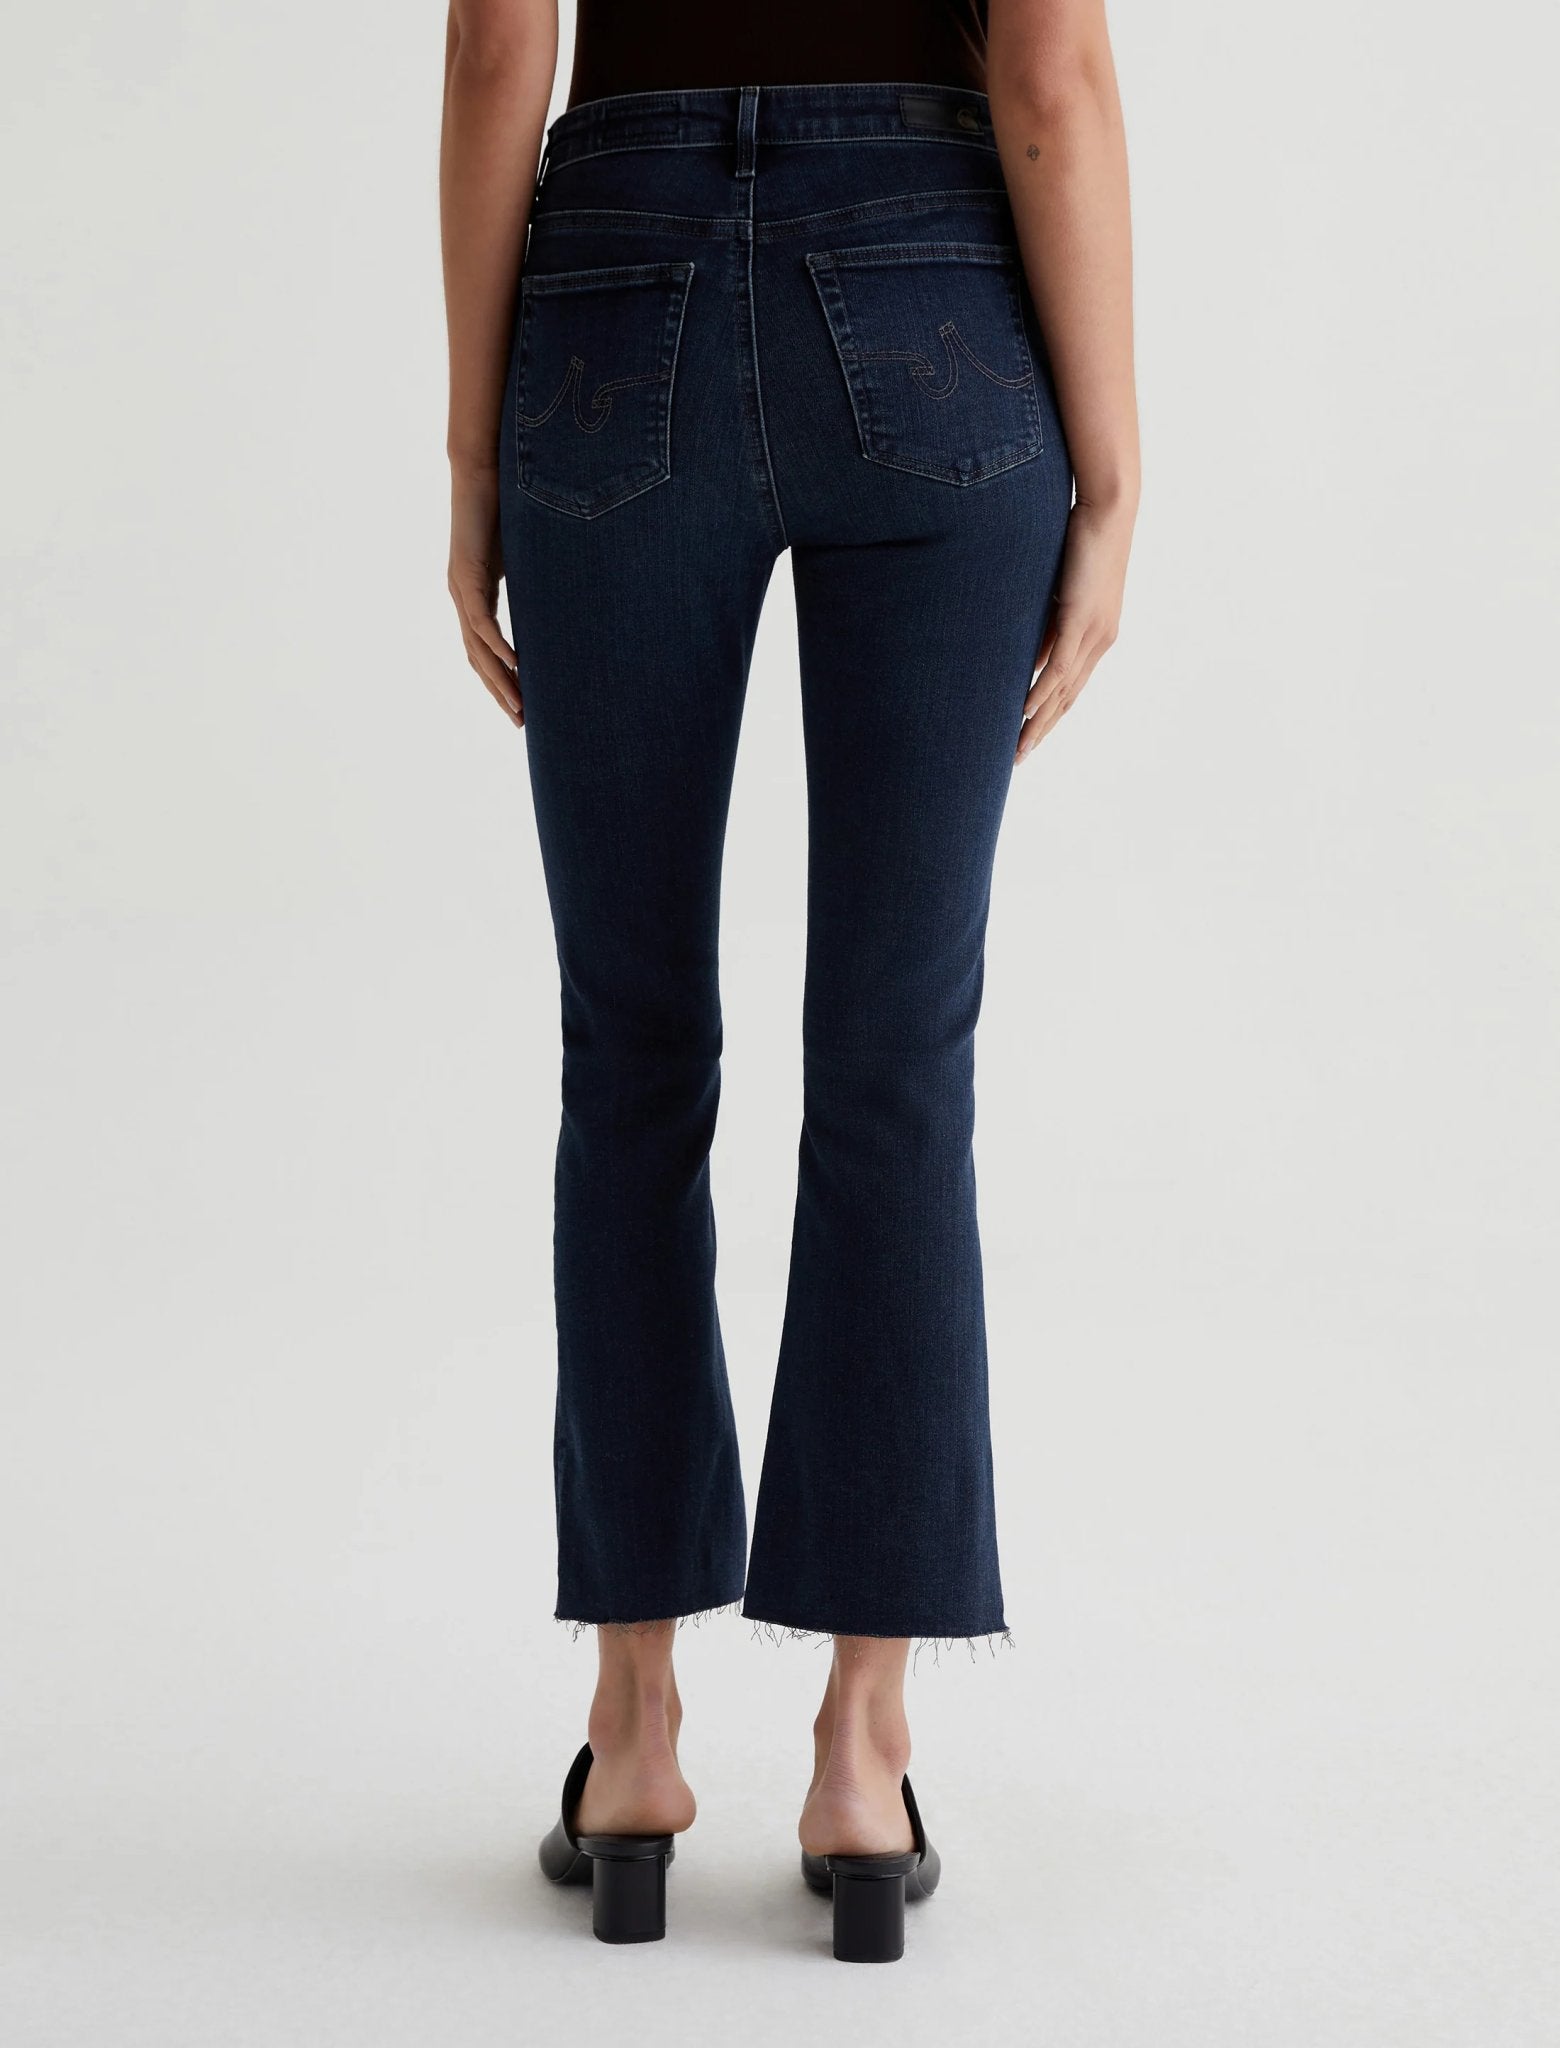 Farrah High Rise Boot Crop Jeans - AG Jeans - Danali - PSI1D55VN-EMRE-25